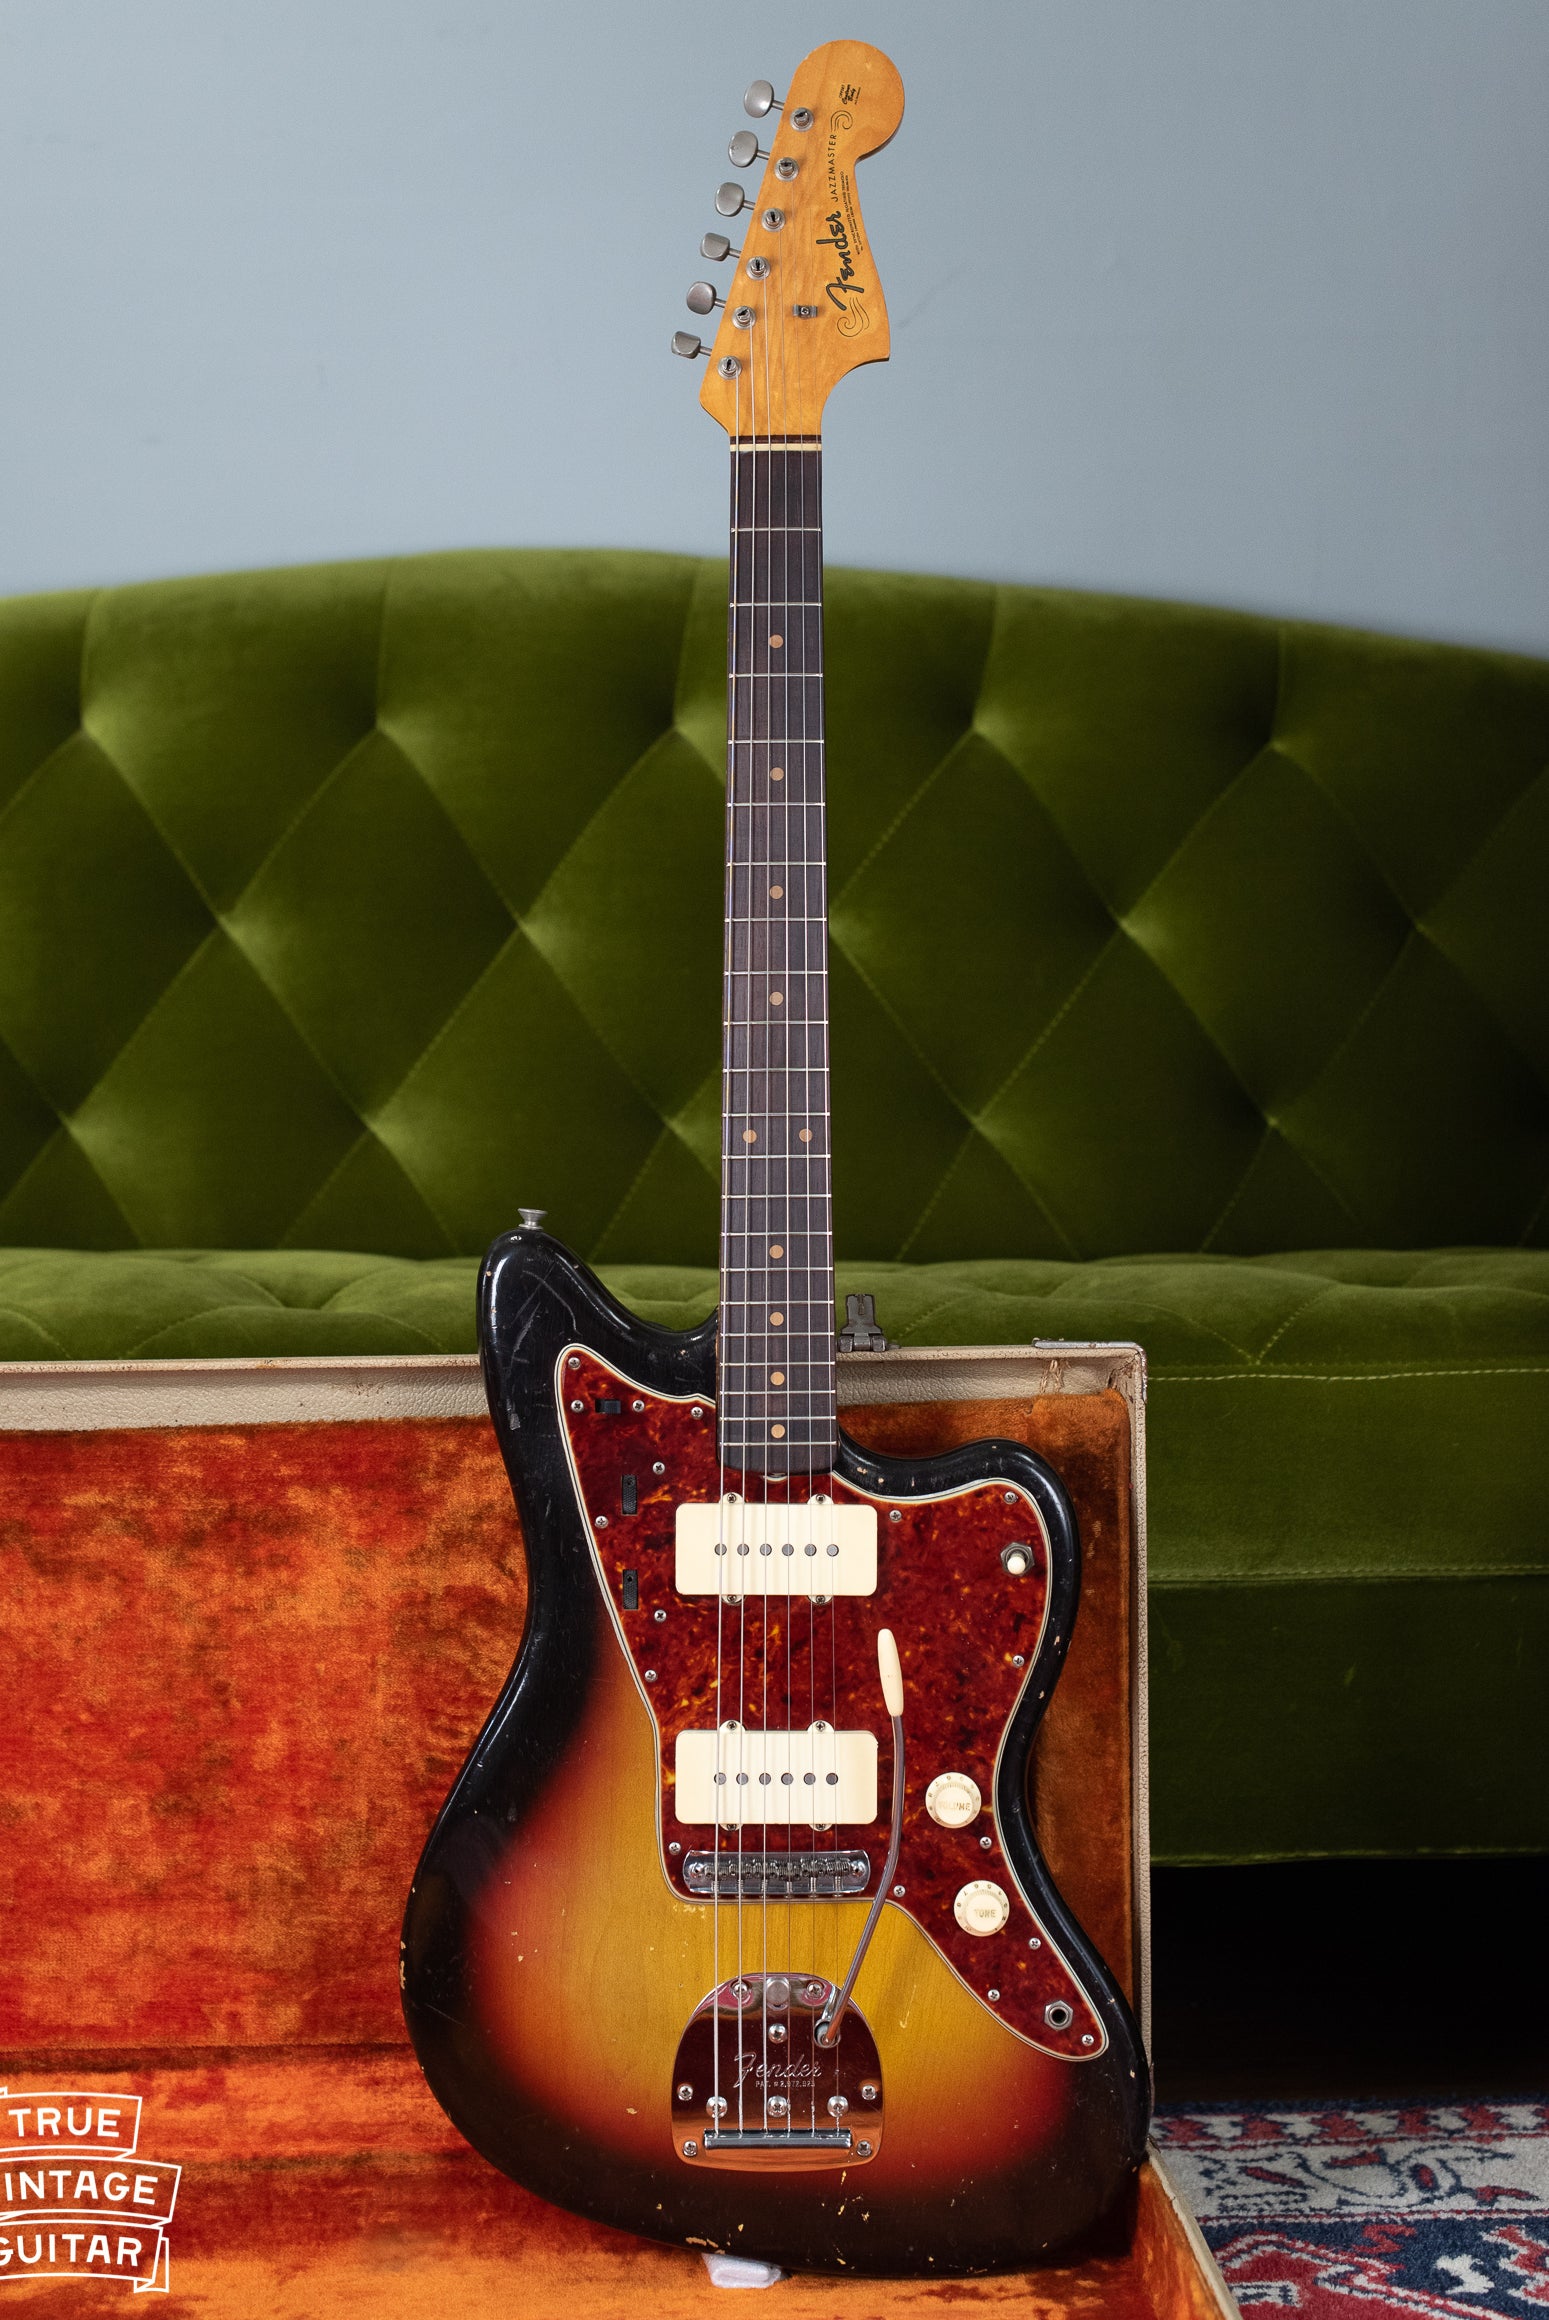 1960s Fender Jazzmaster guitar